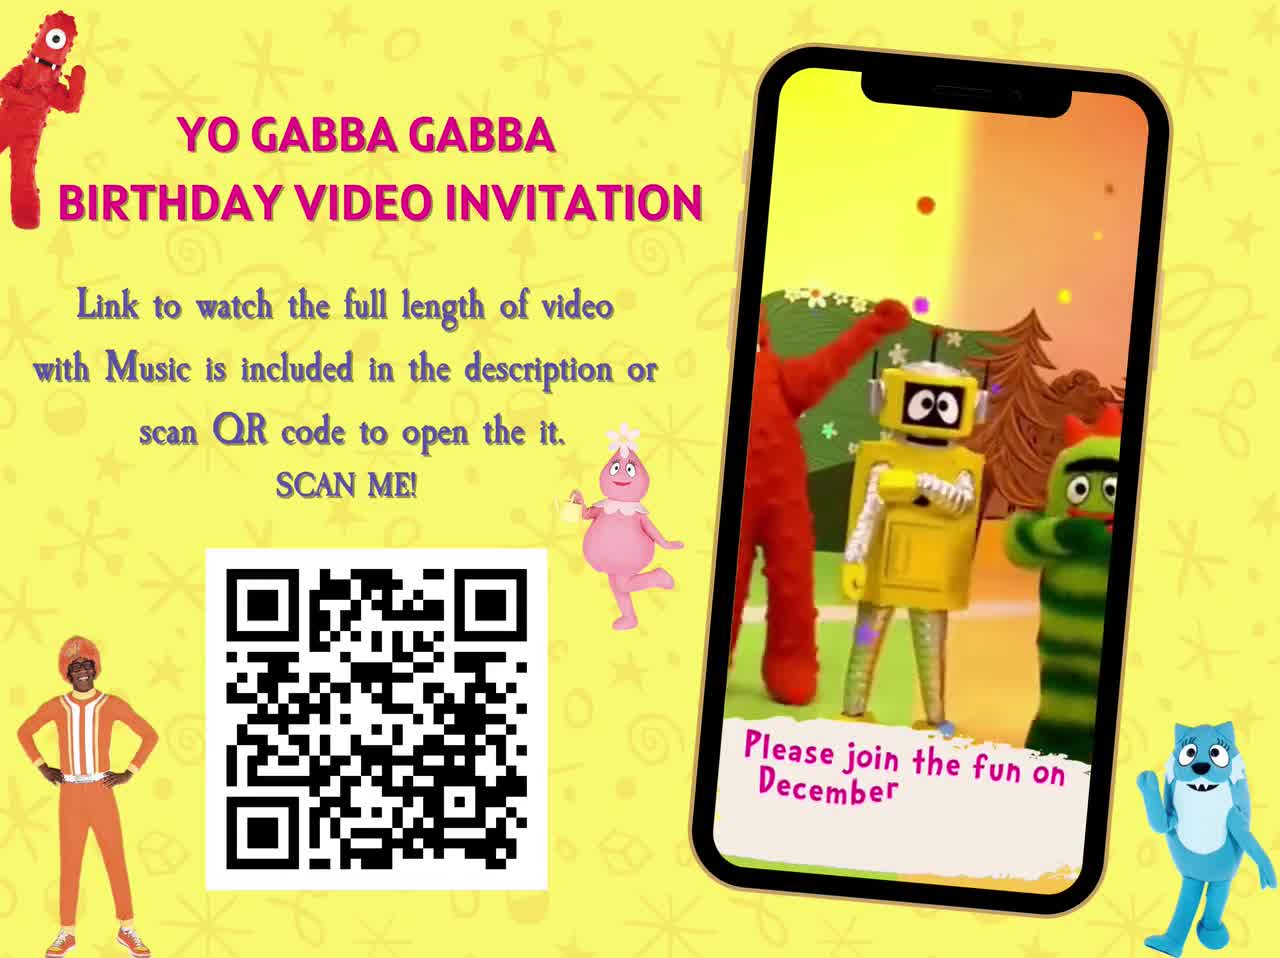 Yo Gabba Gabba designs, themes, templates and downloadable graphic